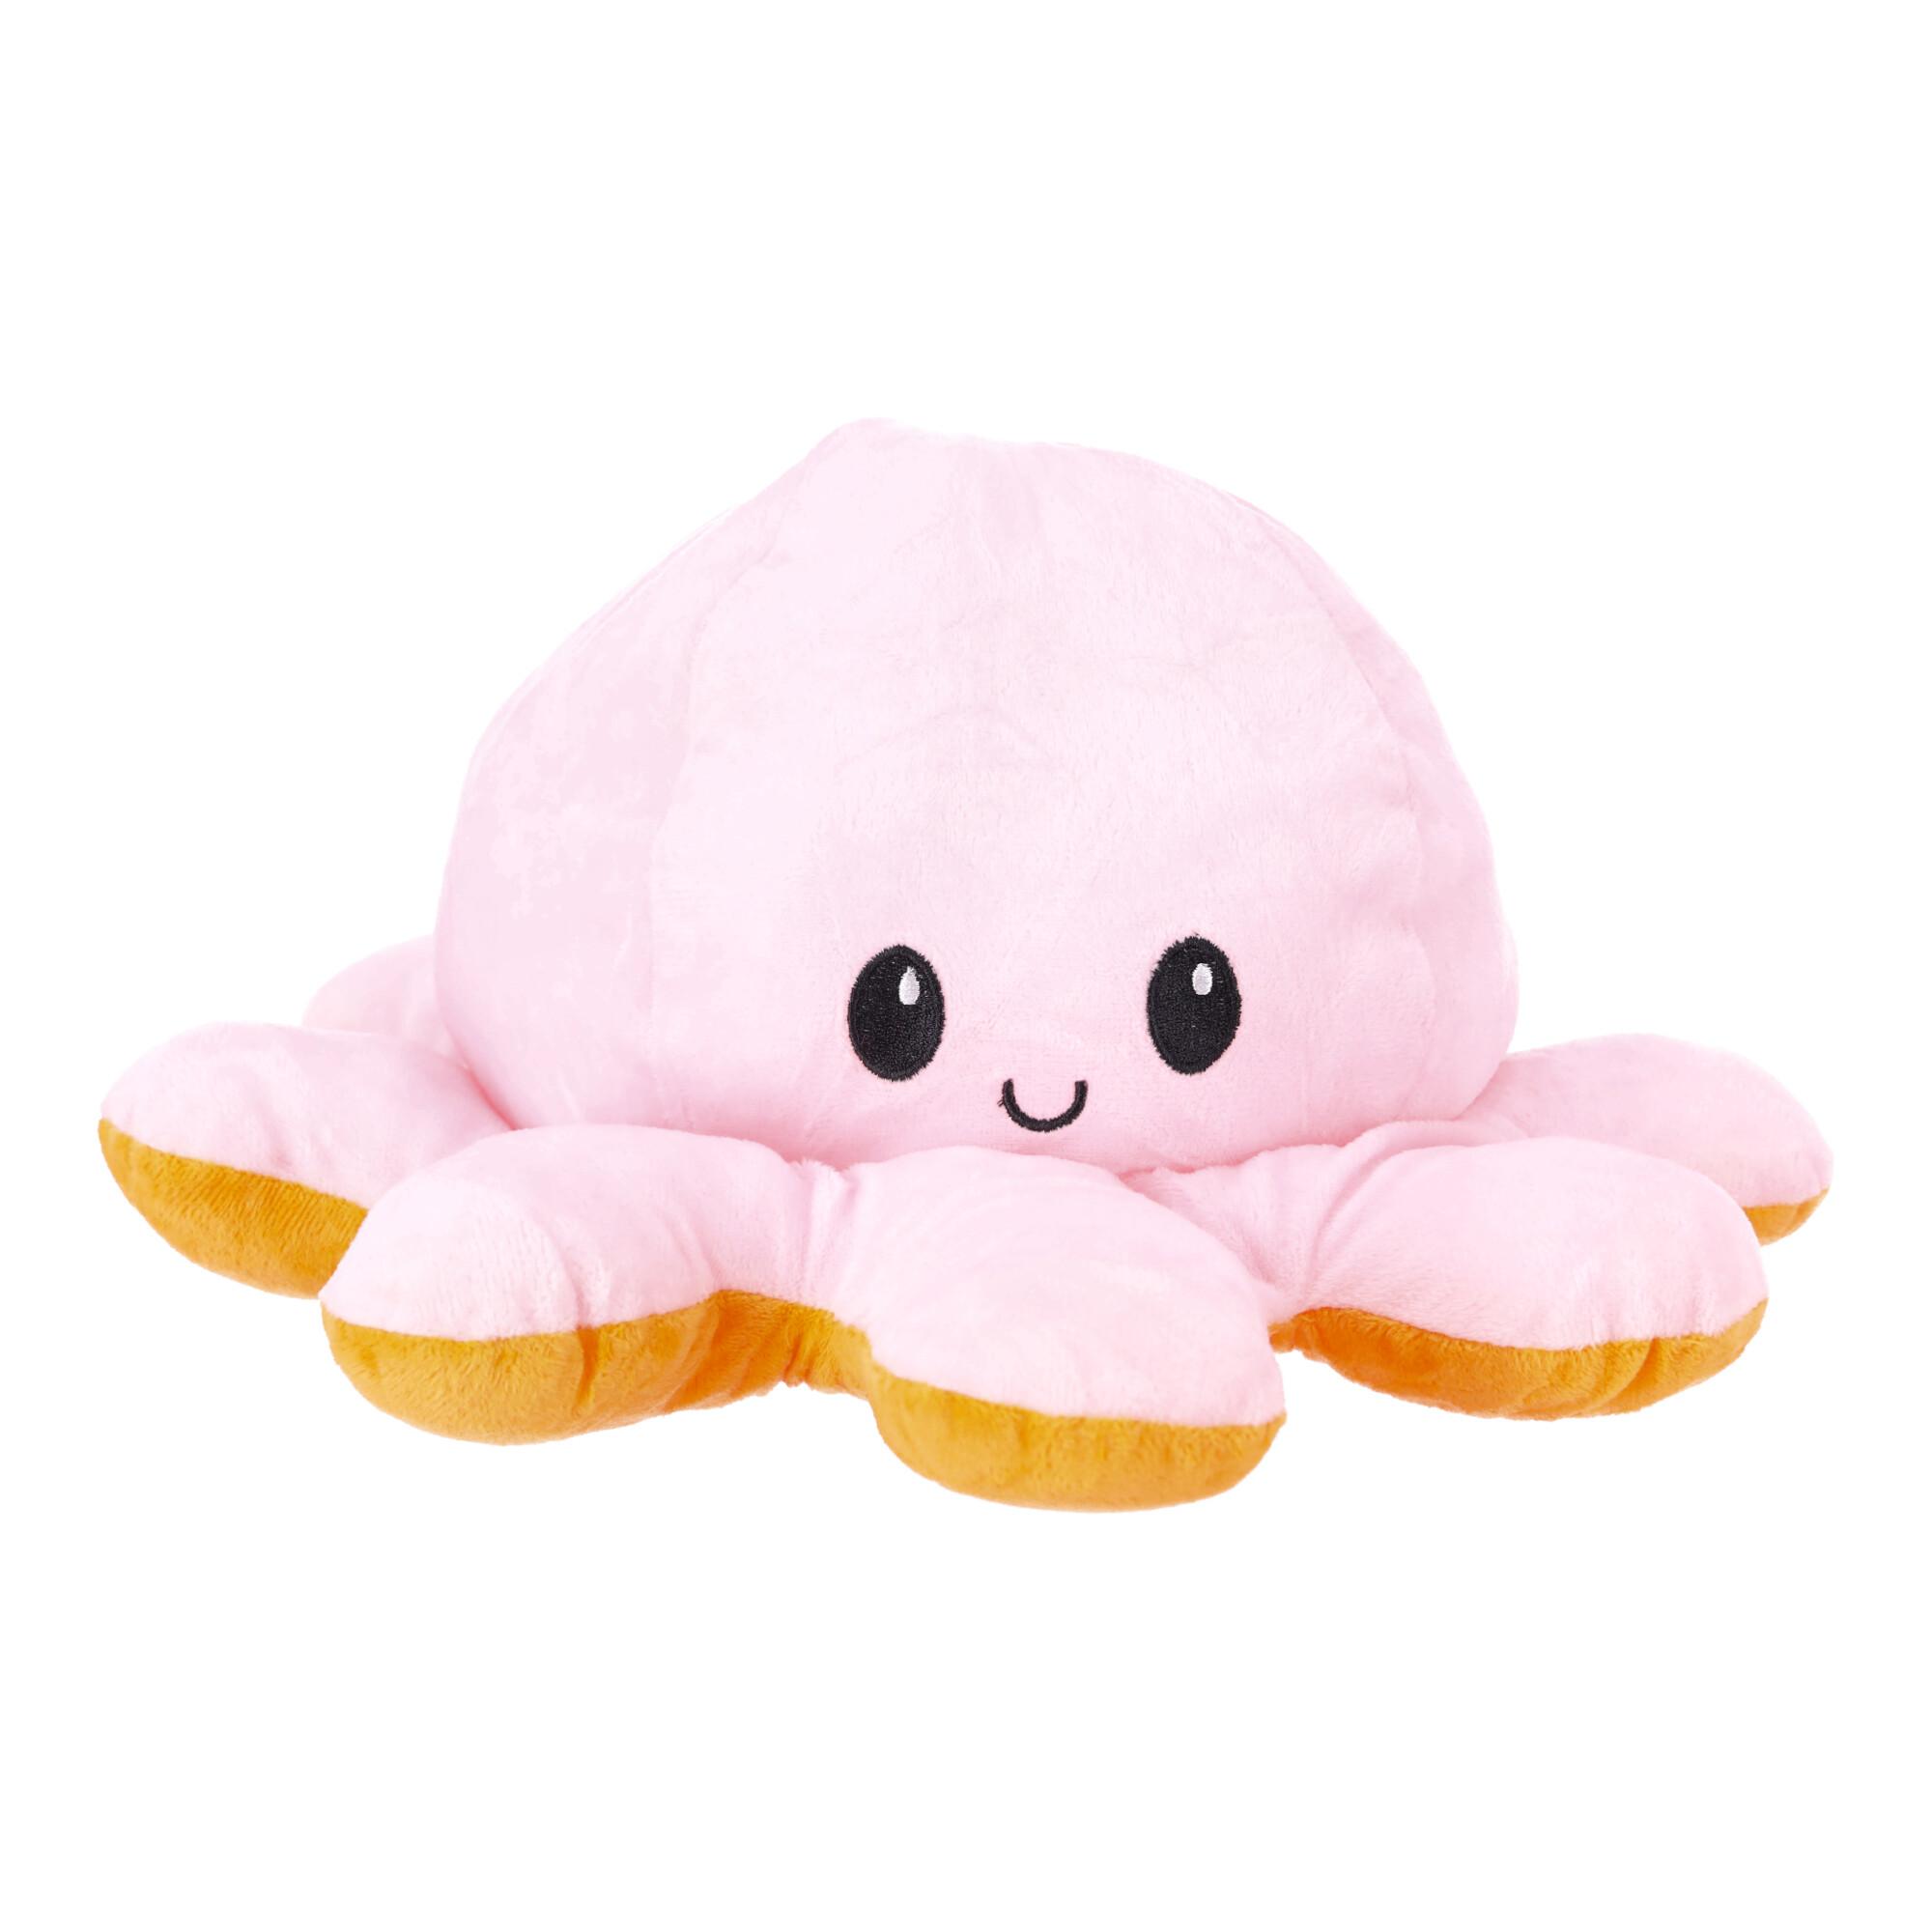 Octopus double-sided mascot 40 cm - orange & pink